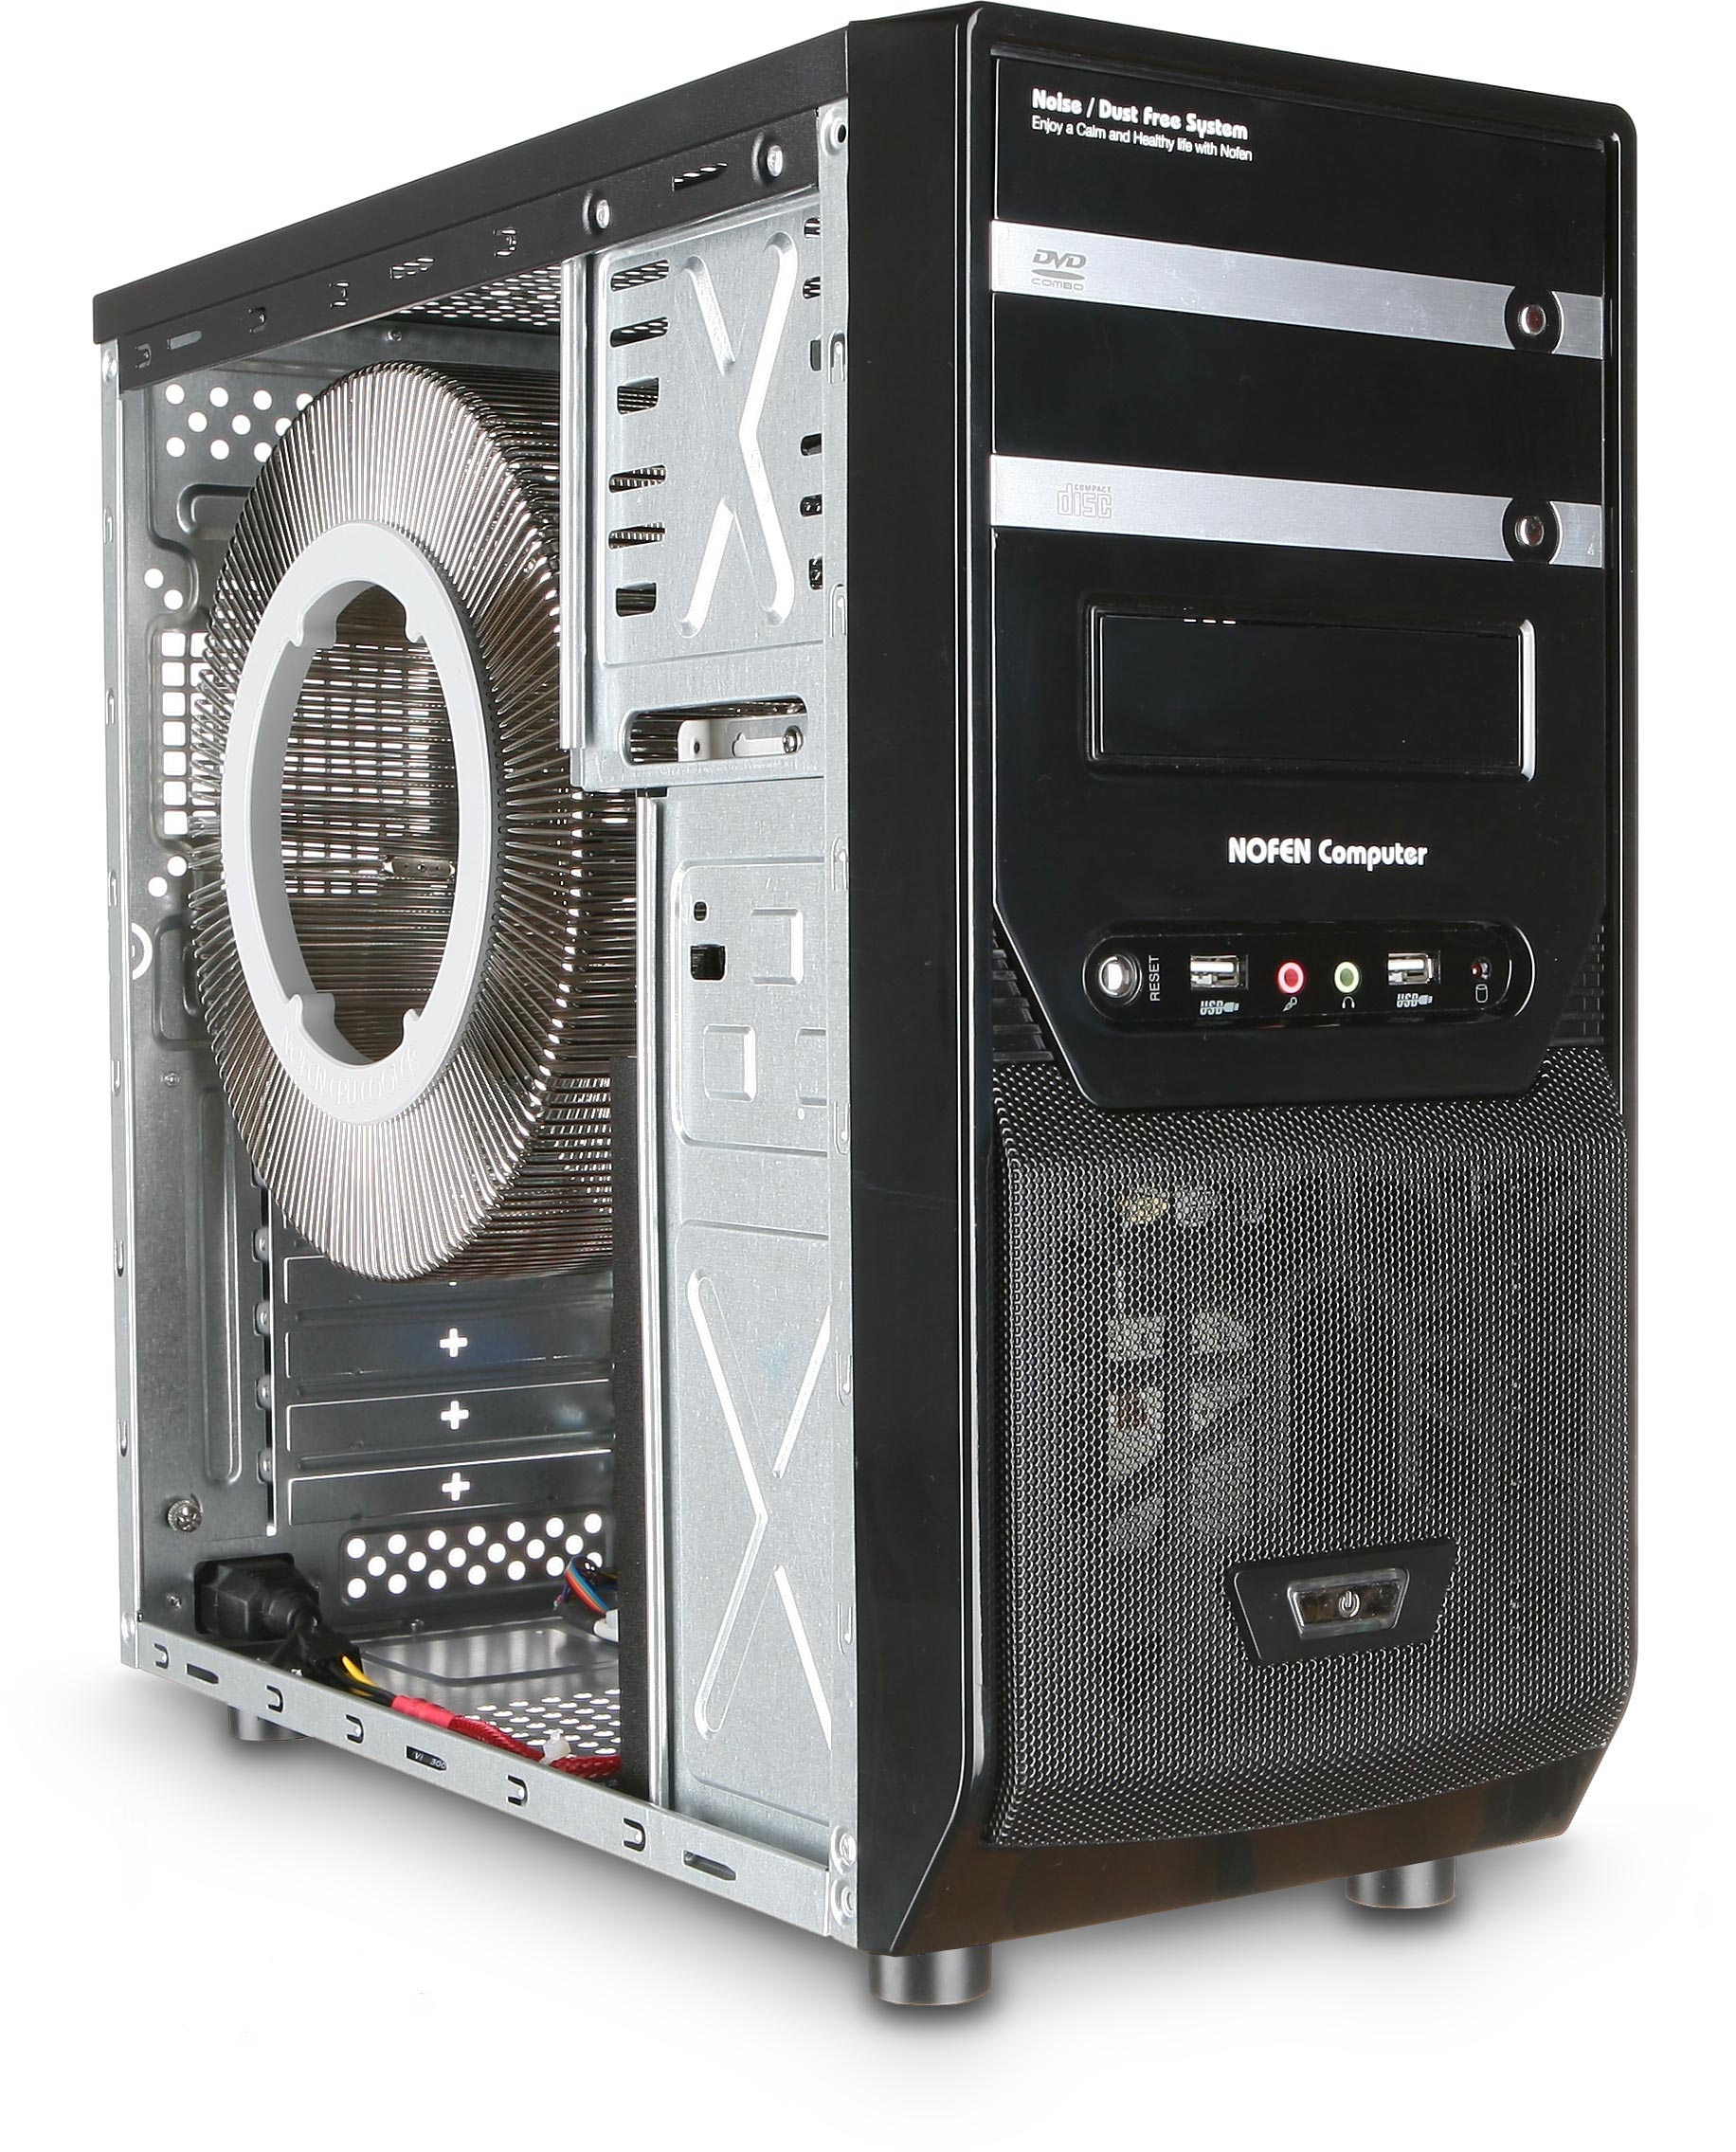 SET-A40 Bundle: CS-30 Case, 400W PSU and Cooler